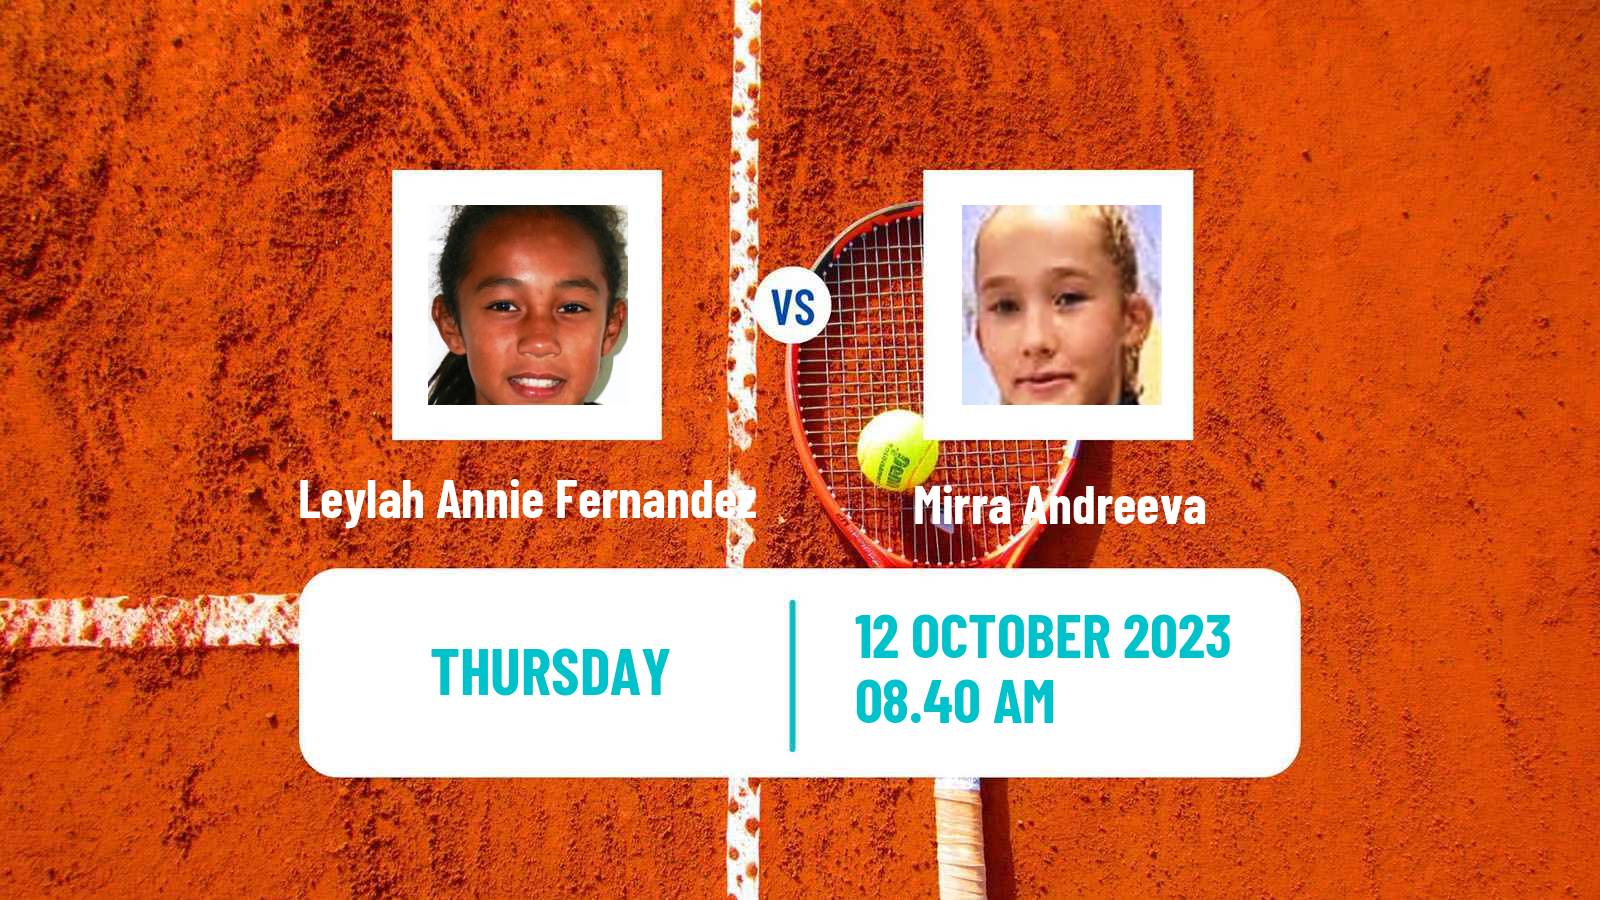 Tennis WTA Hong Kong Leylah Annie Fernandez - Mirra Andreeva